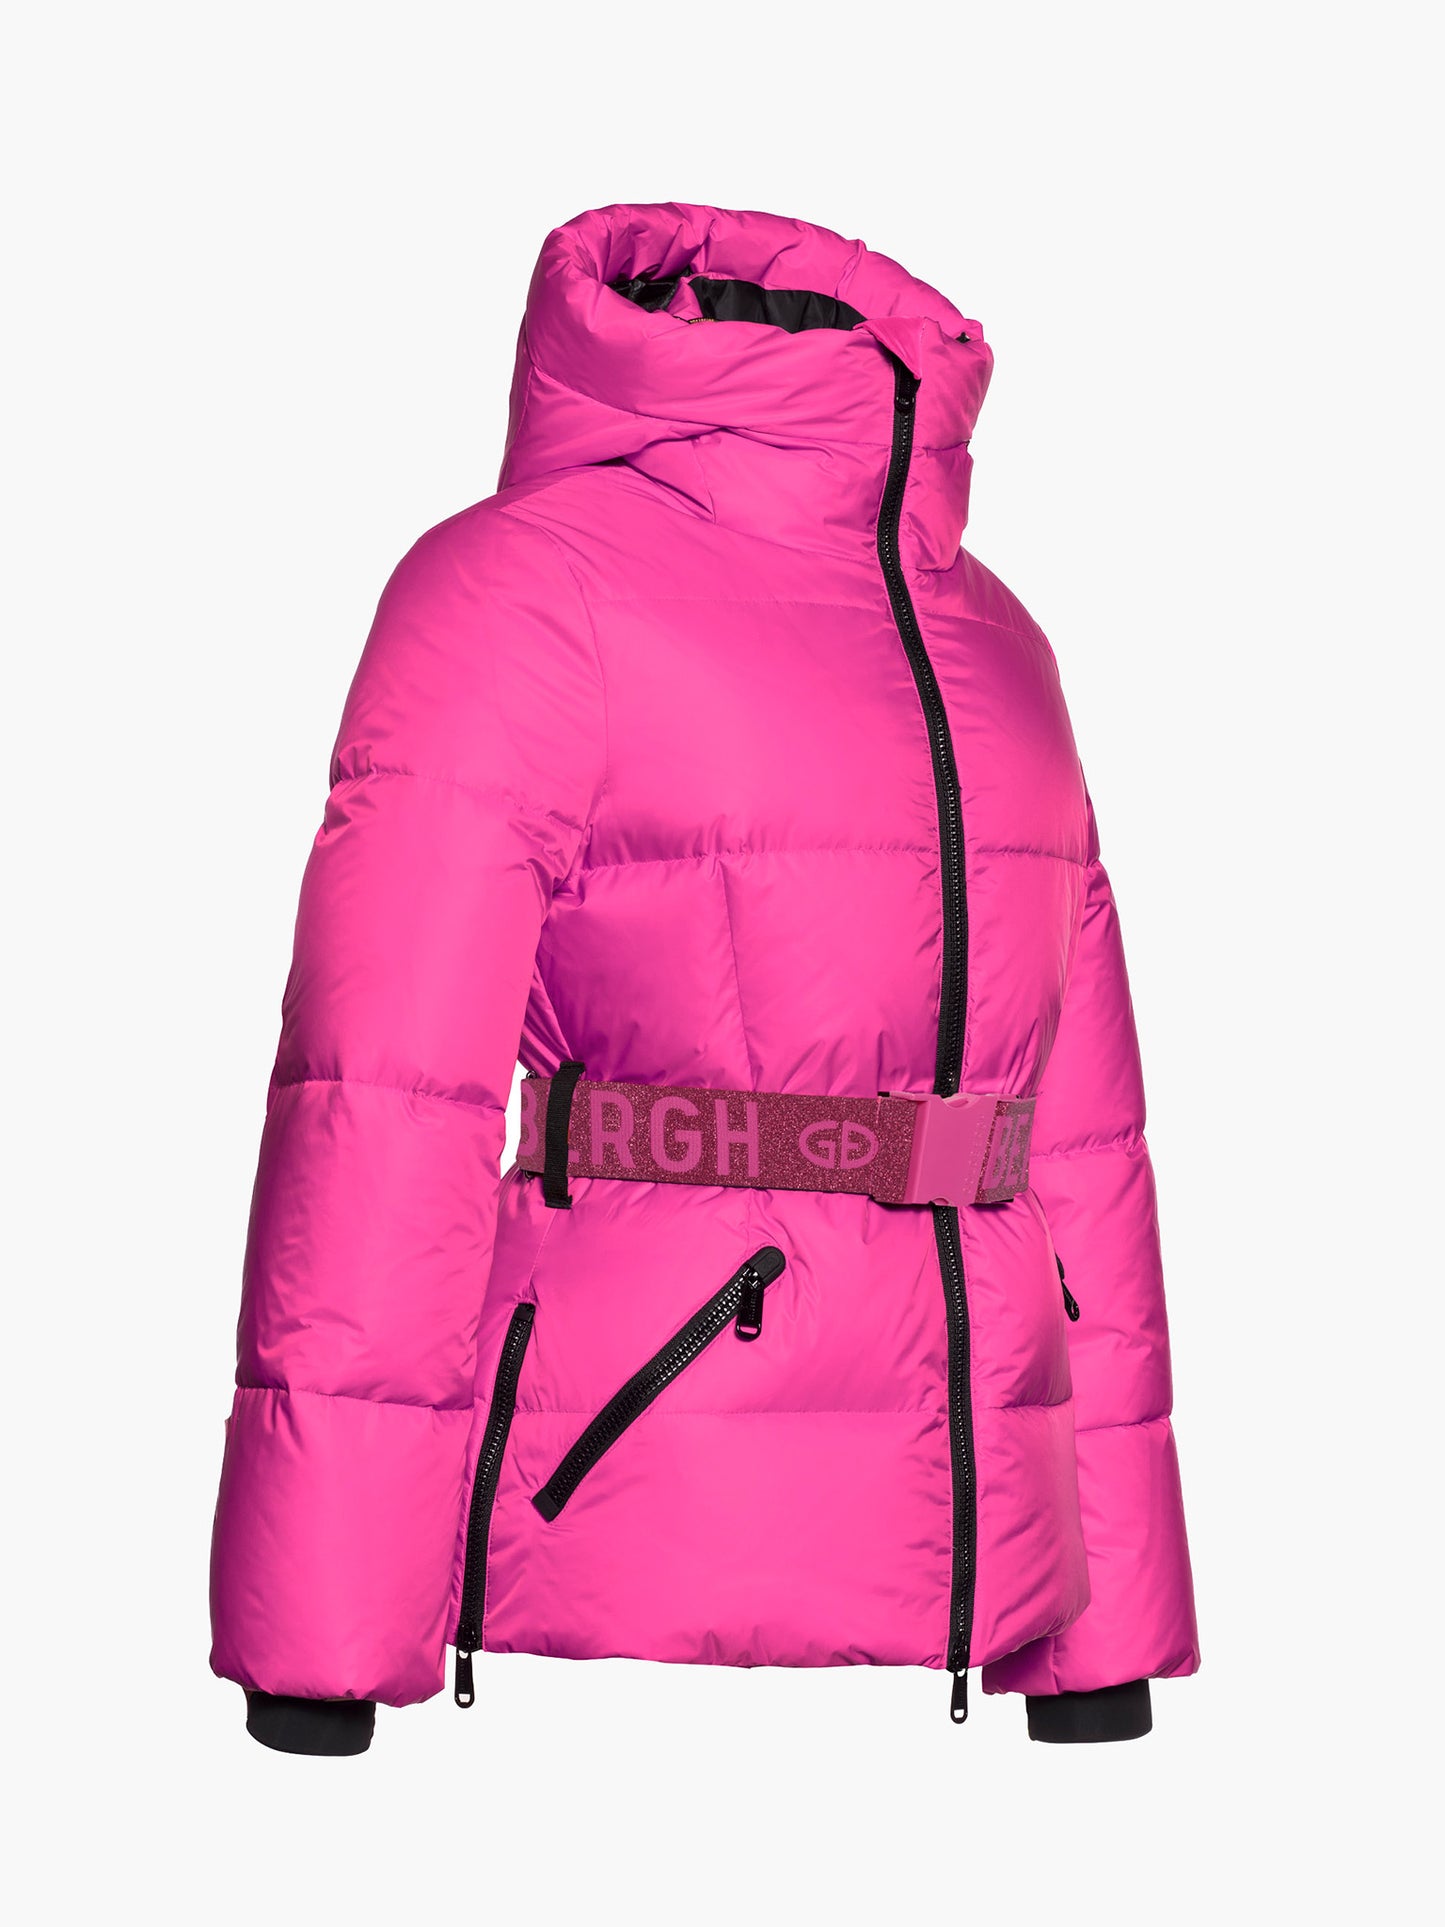 SNOW ski jacket